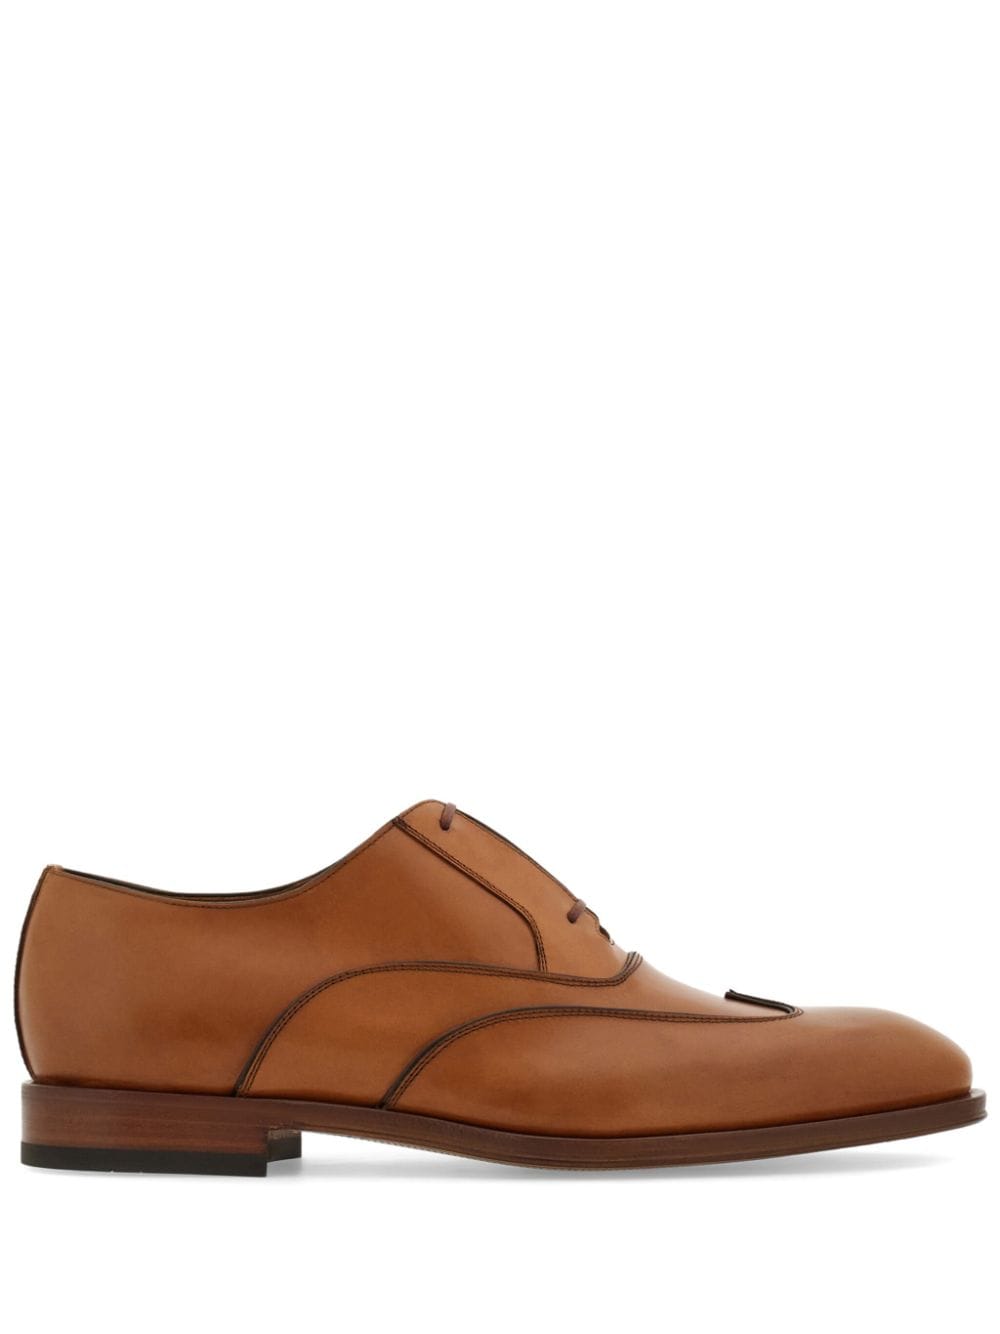 Ferragamo wingtip leather Oxford shoes - Brown von Ferragamo